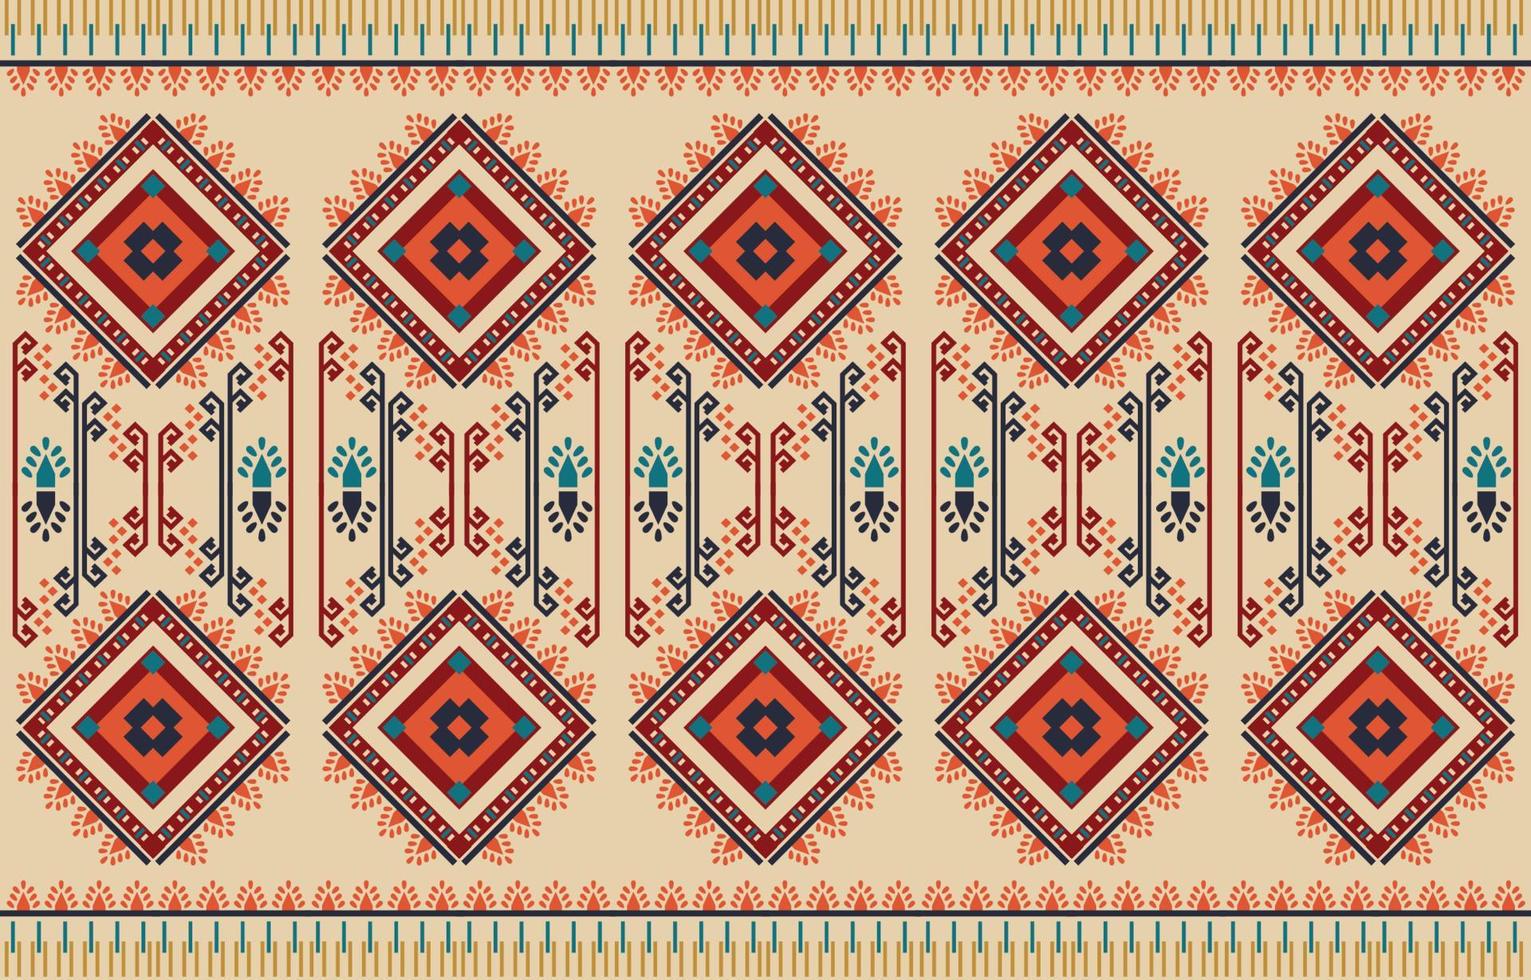 etnisk abstrakt kvadratisk mönsterkonst. seamless mönster i tribal, folklig broderi, tribal tyg stil. Aztec geometrisk konst prydnadstryck print.design för mattor, kläder, omslag, tyg, omslag, textil vektor